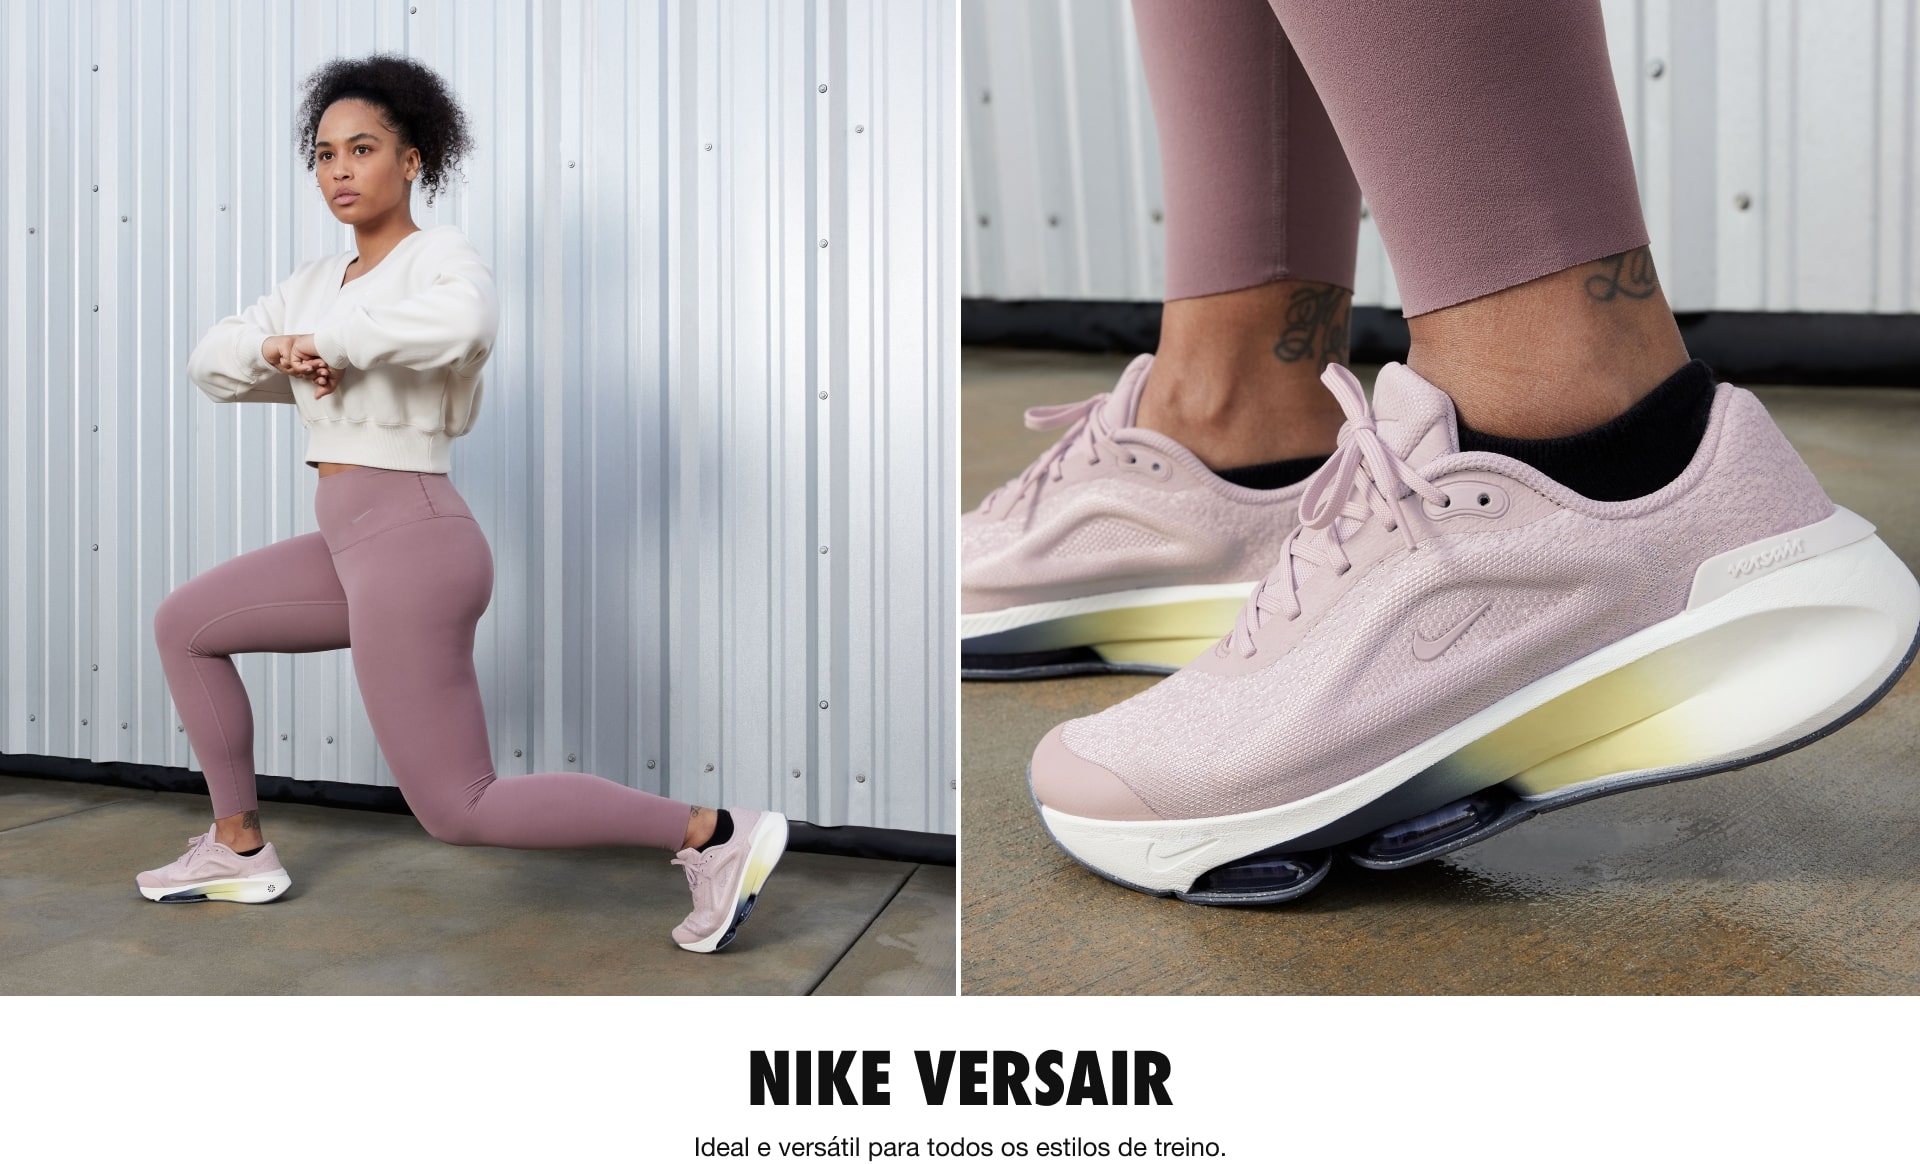 Nike Versair - Ideal e versátil para todos os estilos de treinos.